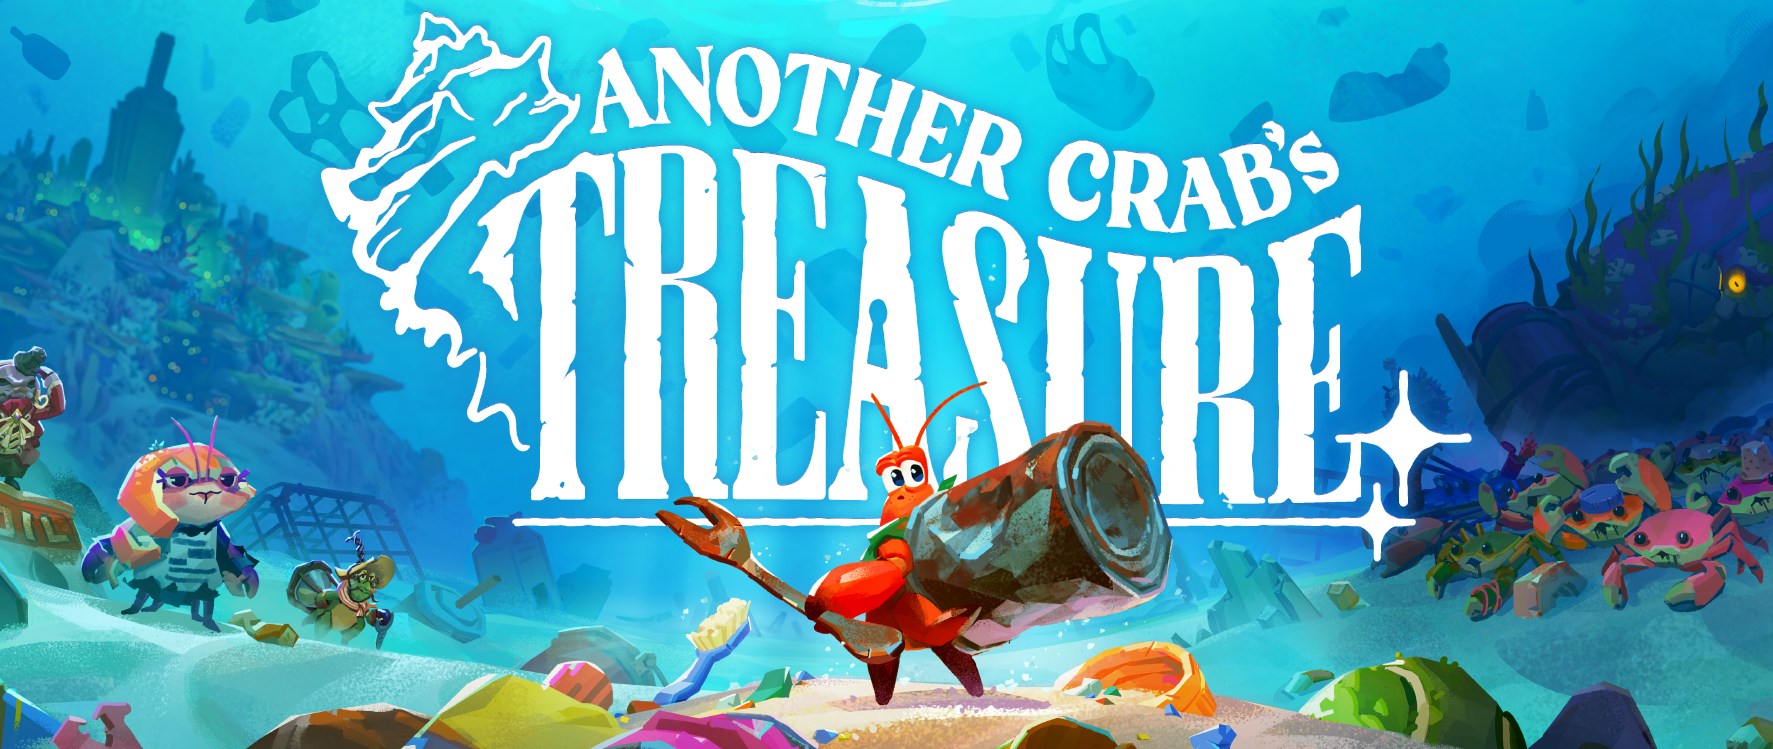 Another Crabs Treasure - №10 Консорциум и Злой Кальмар проходимец!